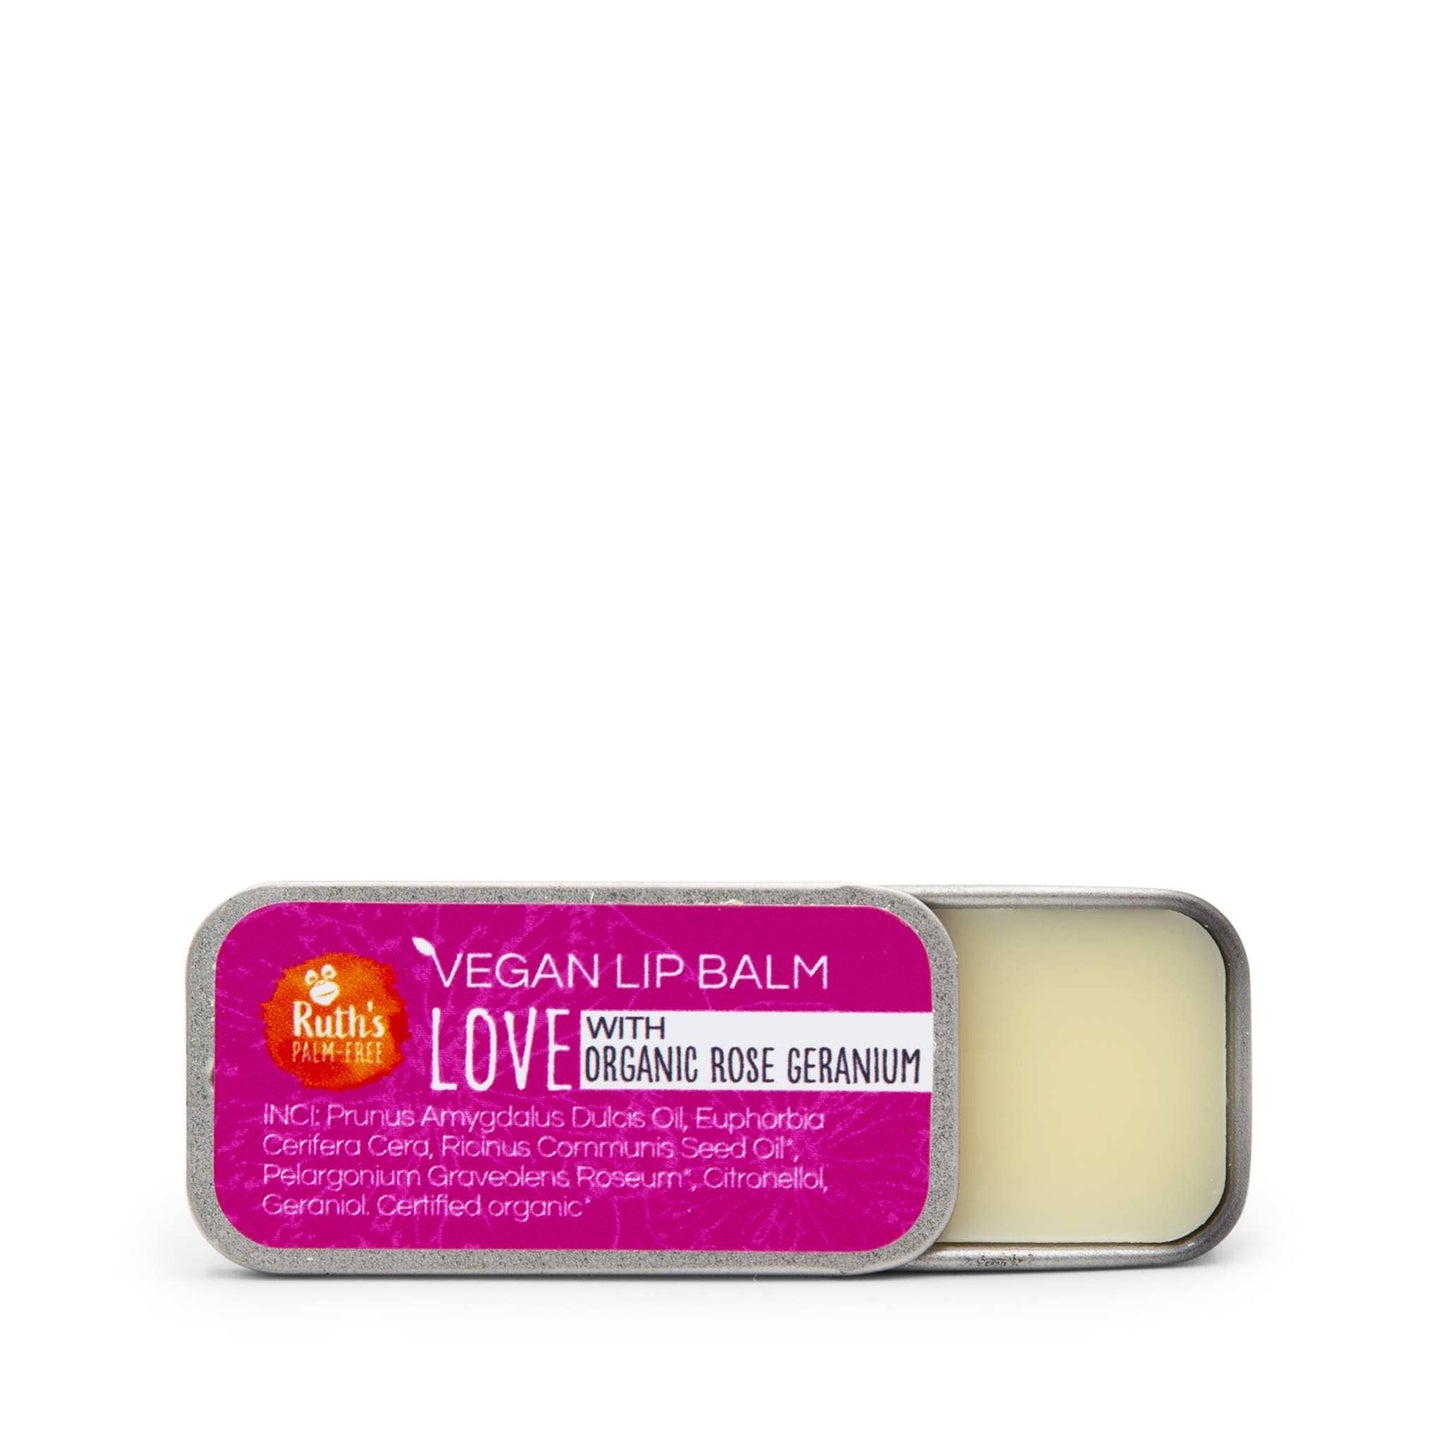 Ruth's Palm Free Skincare Love Vegan Lip Balm - with Organic Rose Geranium 7g - Ruth's Palm Free